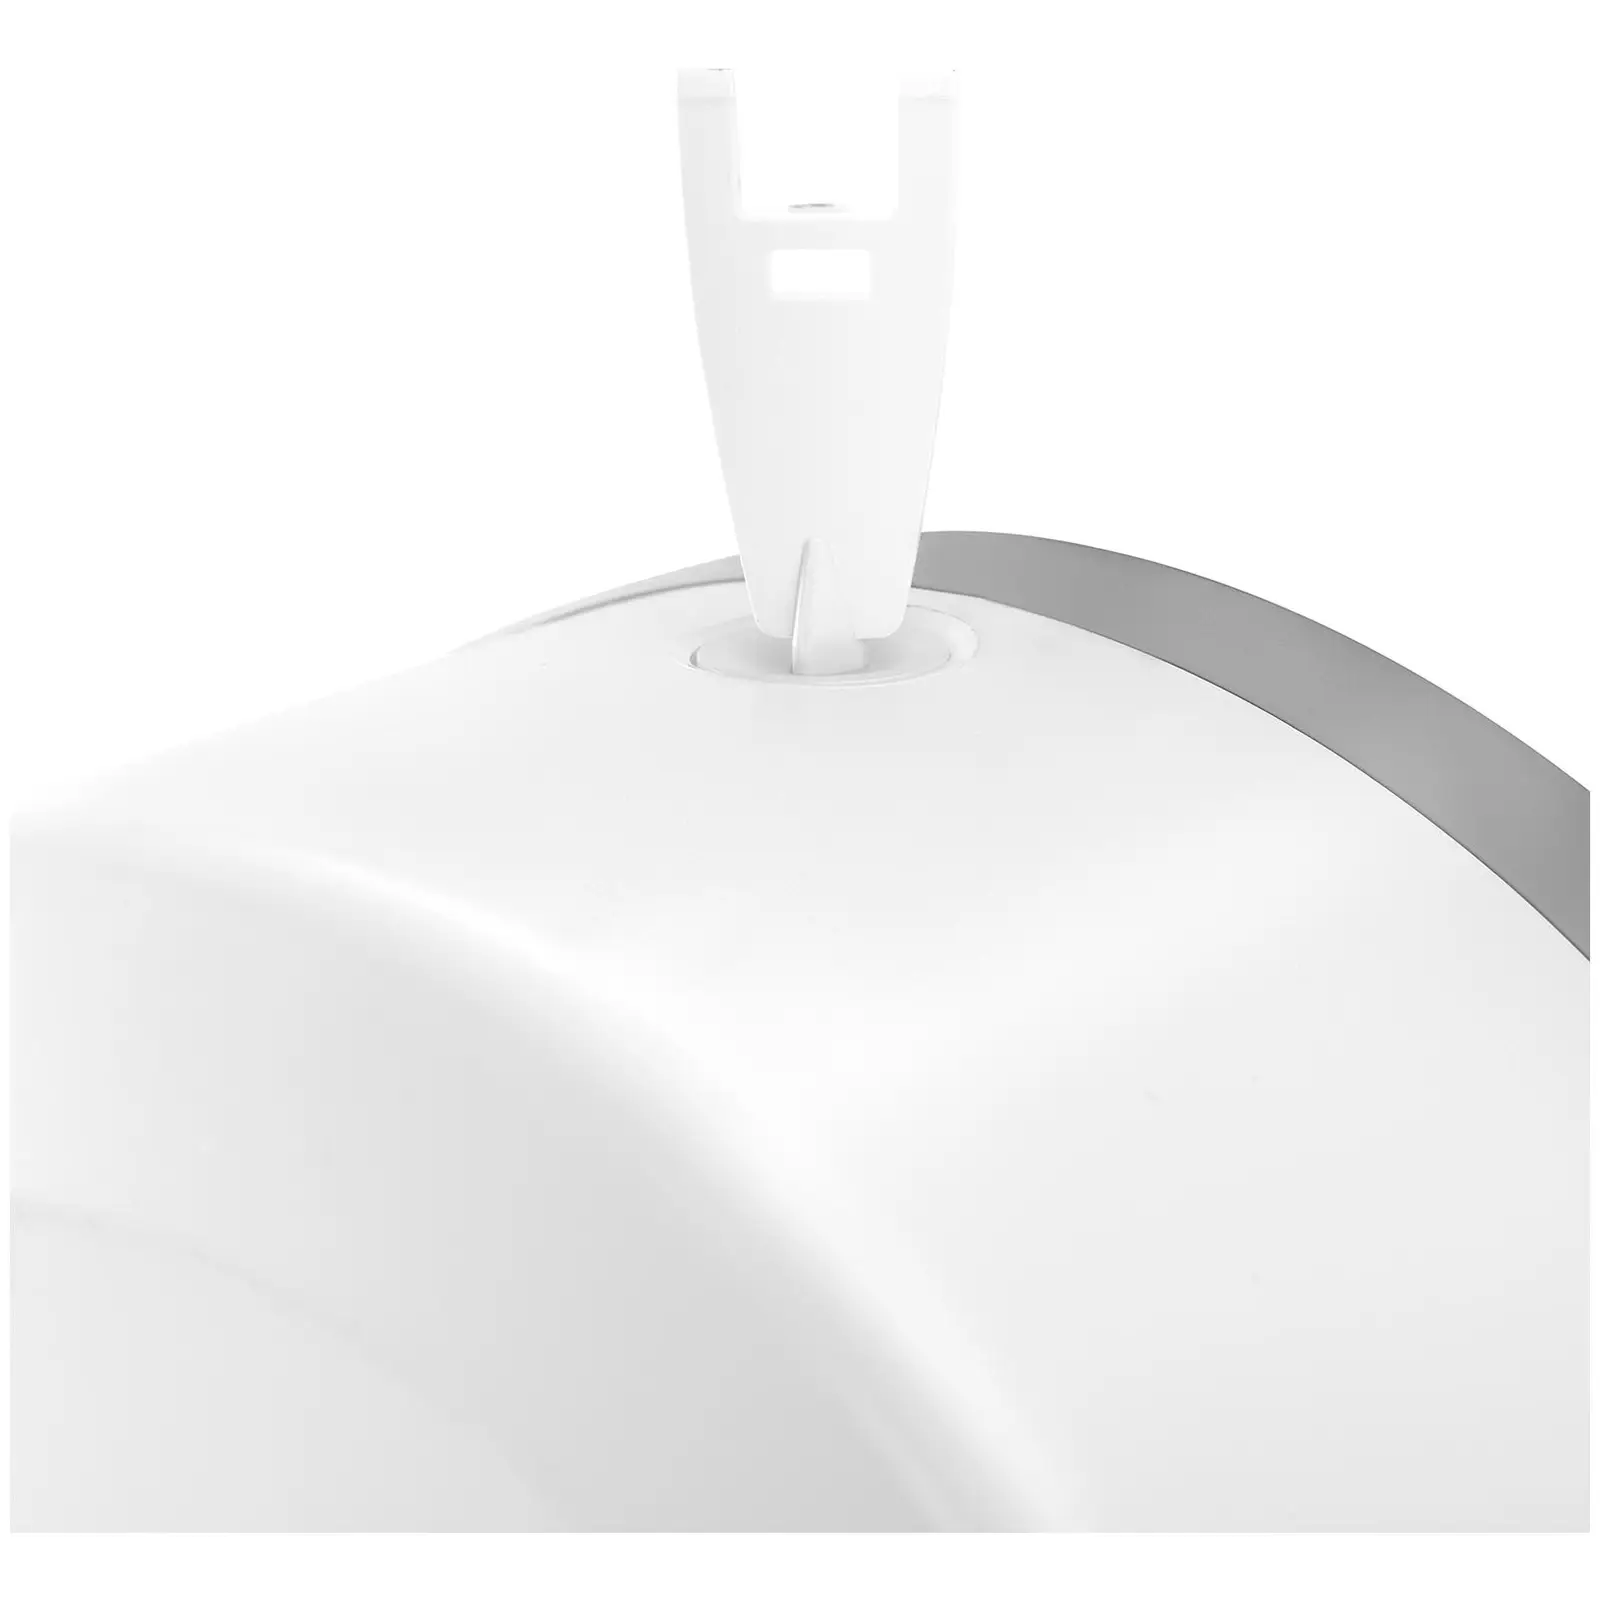 Toilettenpapierspender - für Jumbo-Rollen - ABS